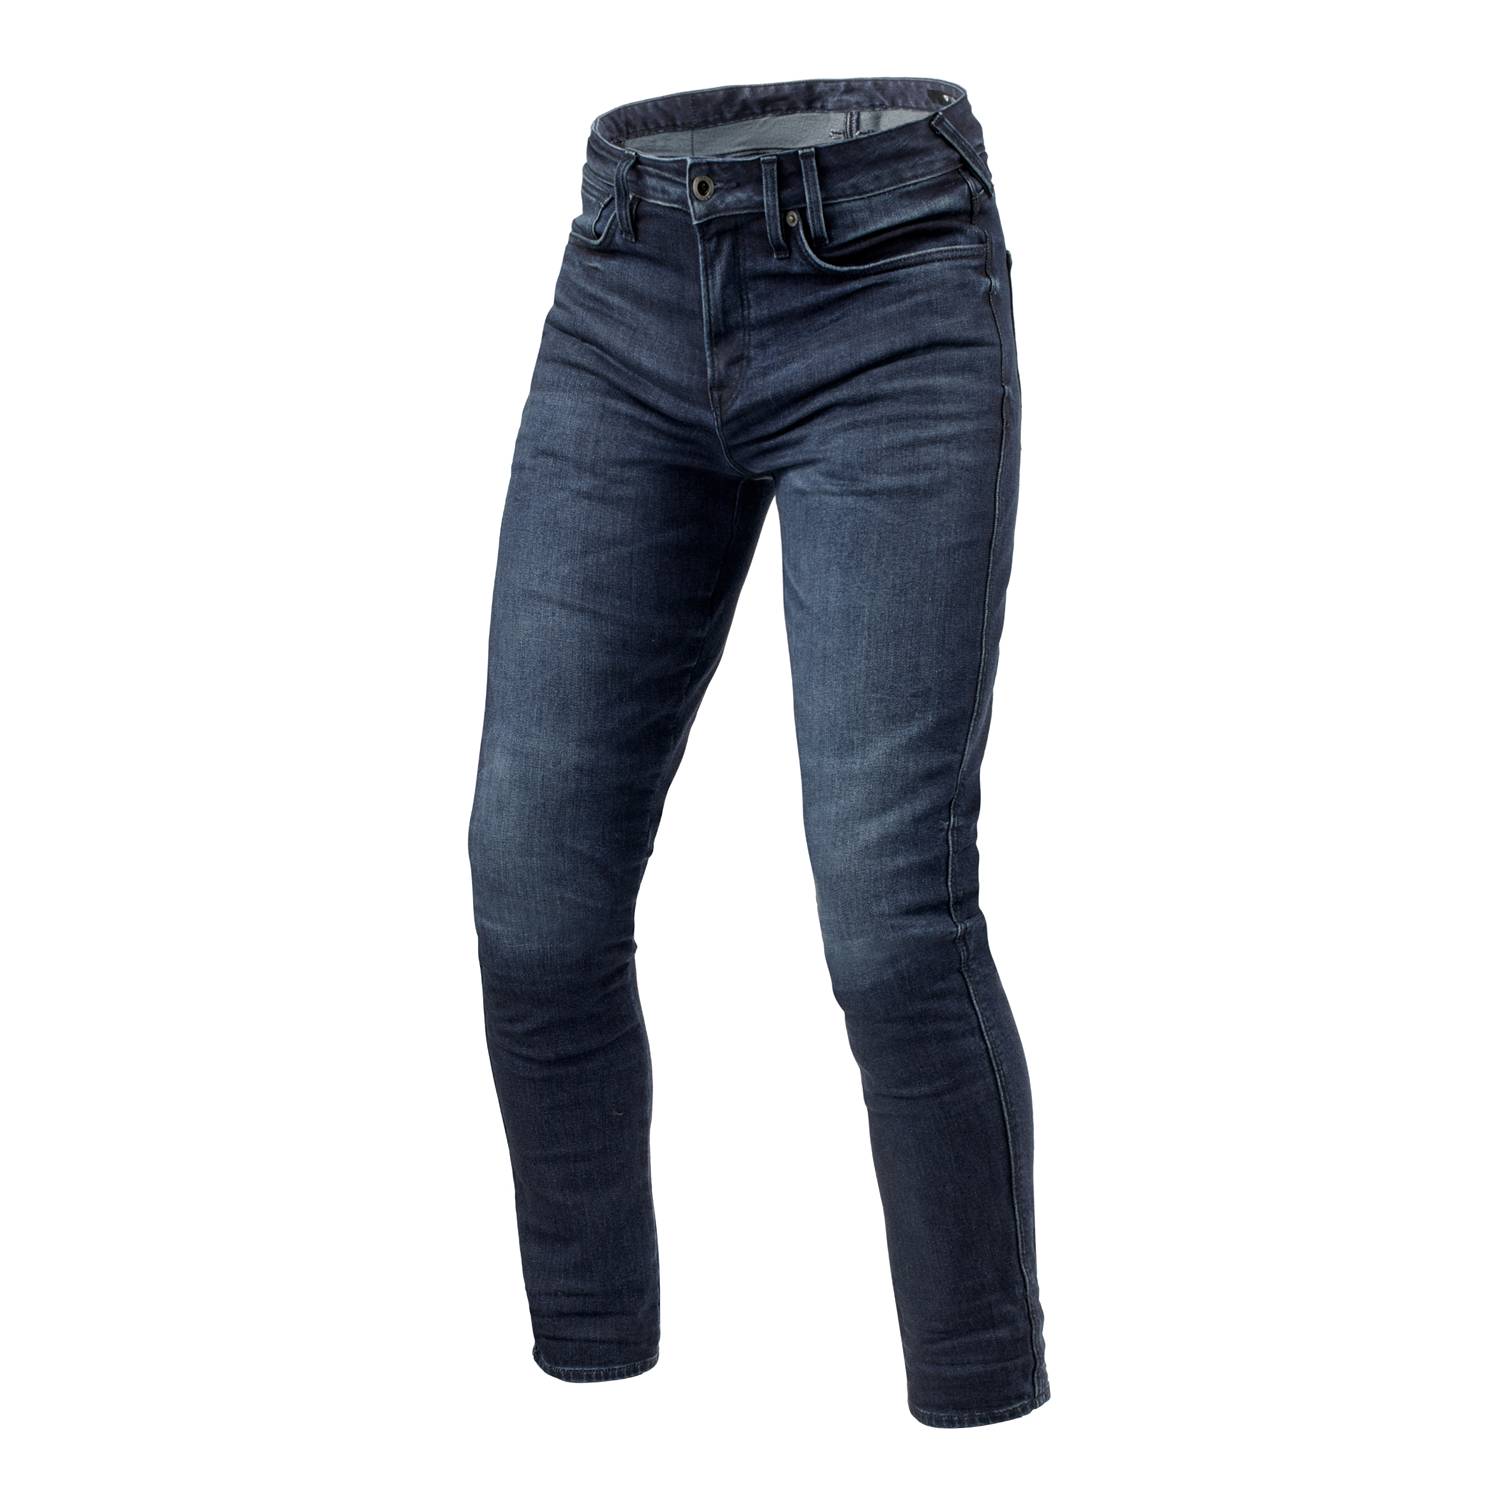 Image of REV'IT! Jeans Carlin SK Dark Blue Used L32 Motorcycle Jeans Größe L32/W31